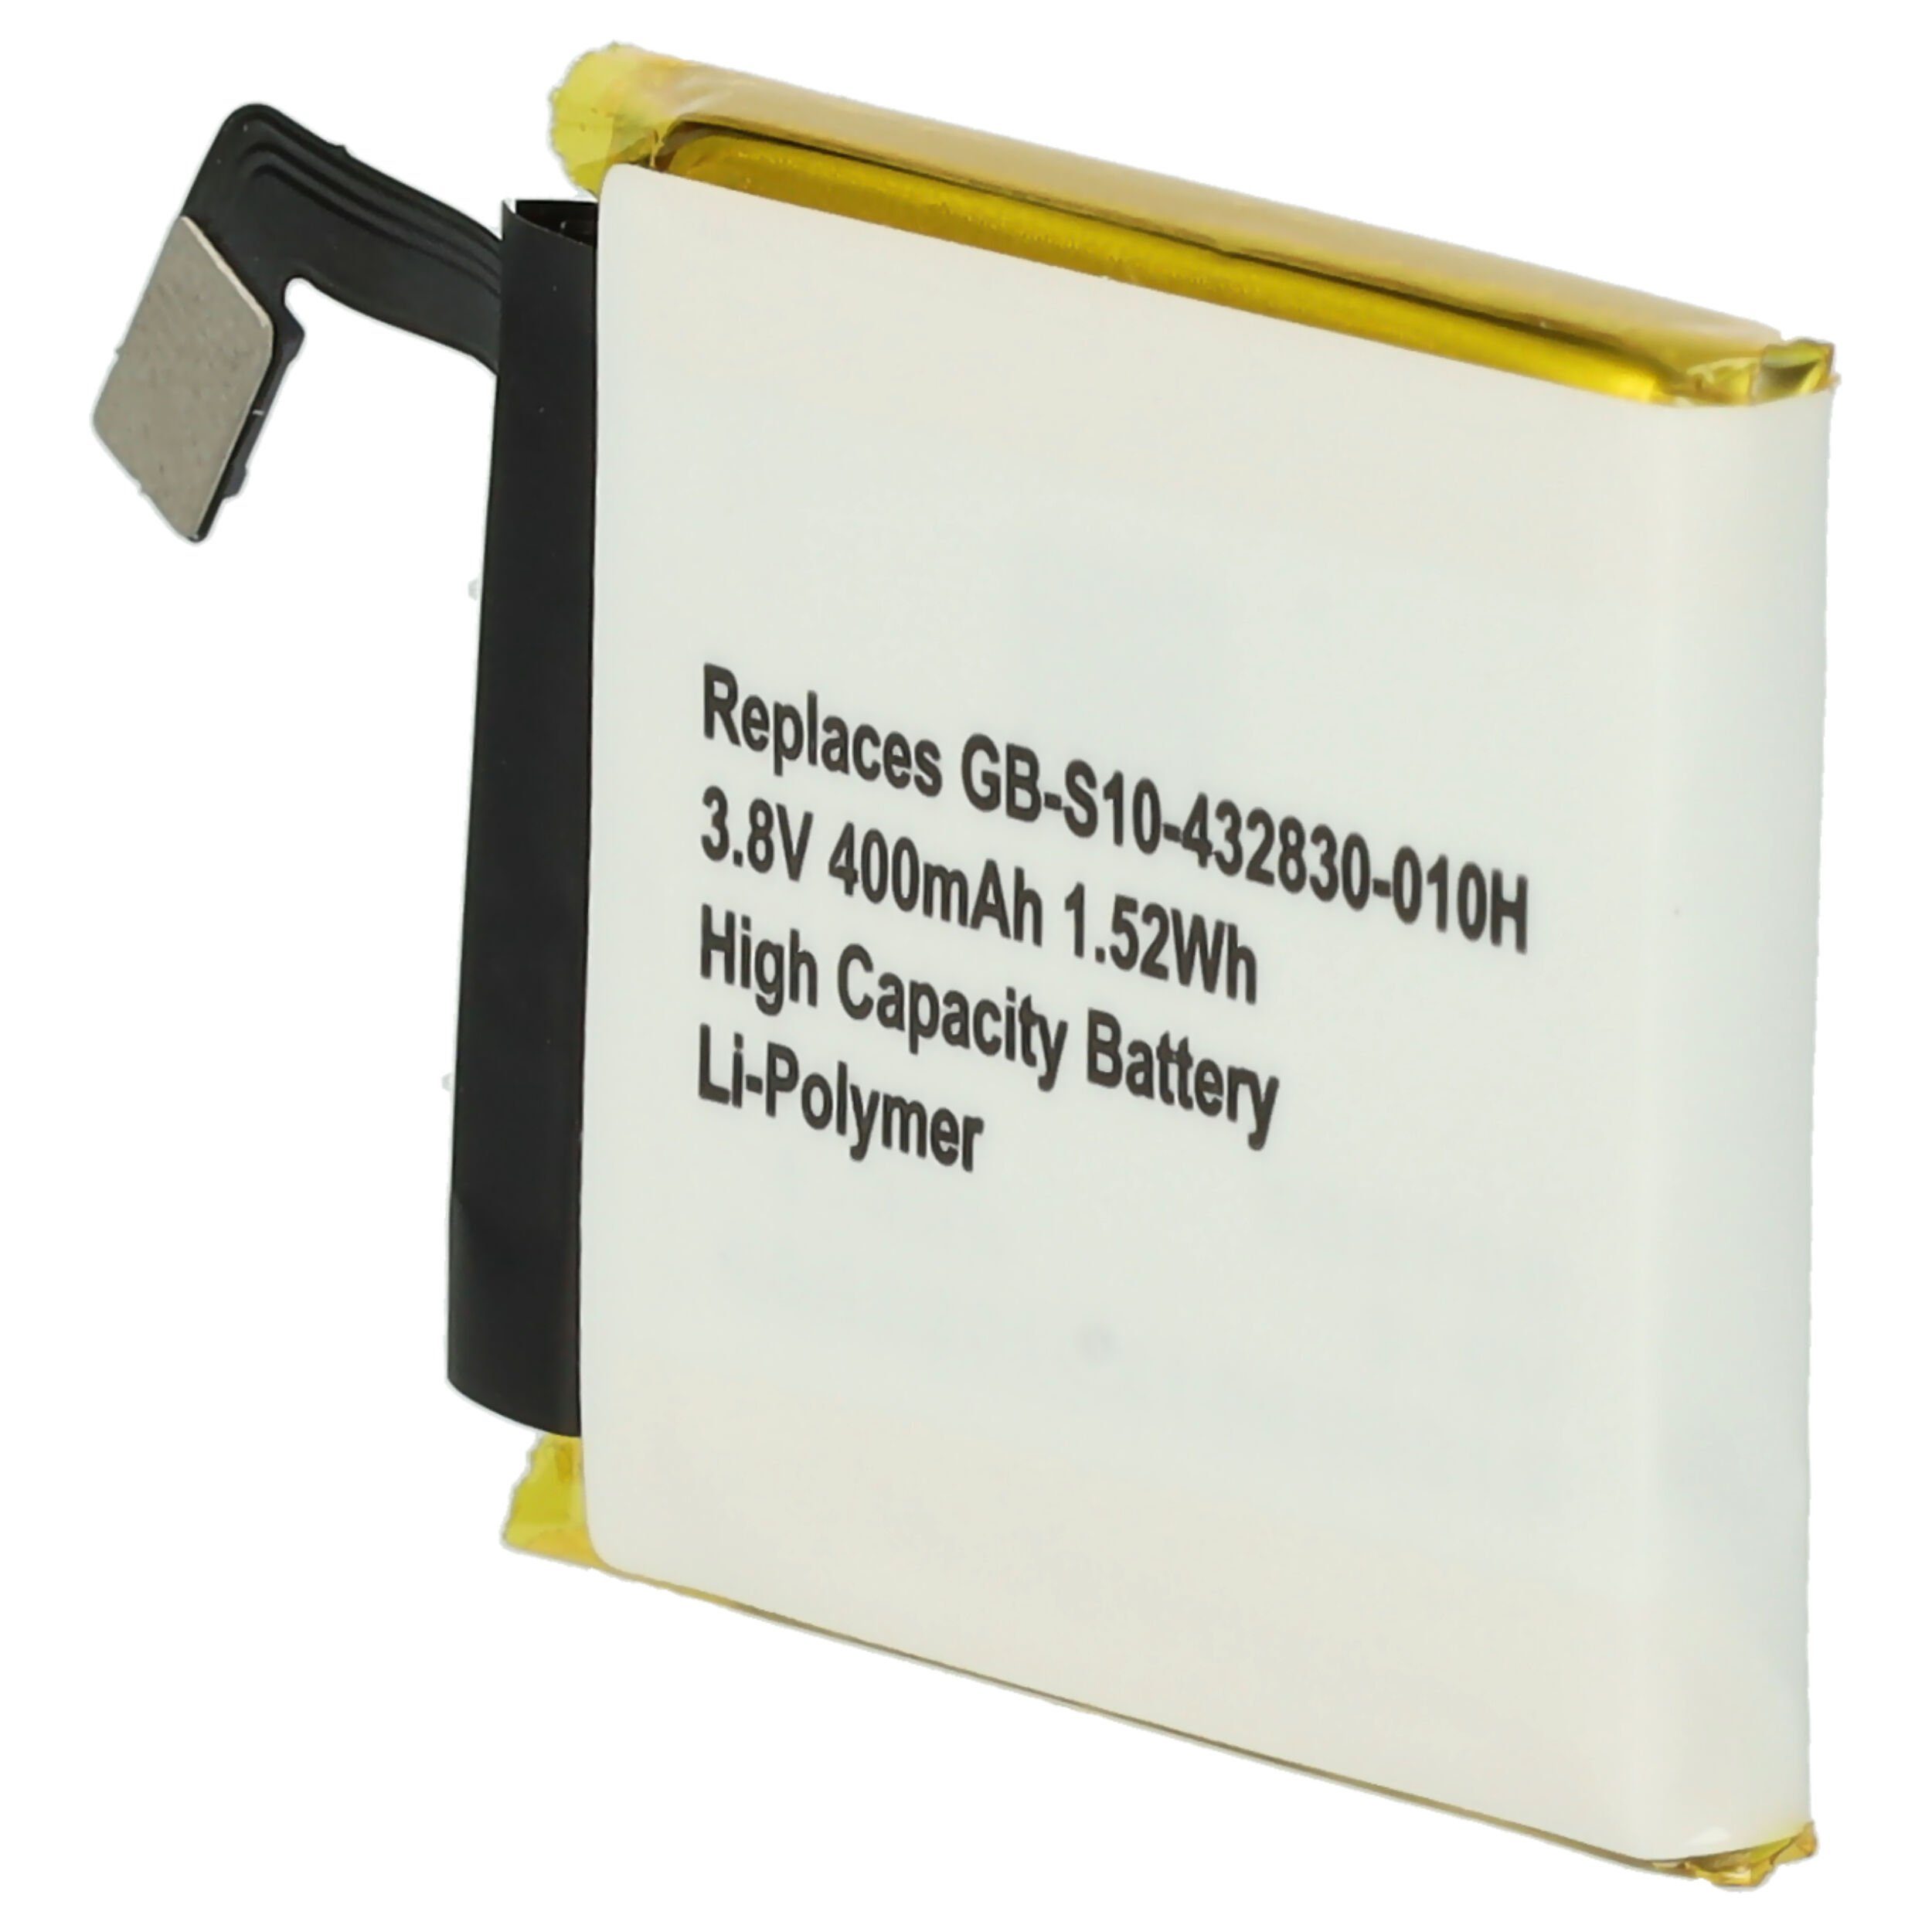 vhbw Ersatz für mAh Akku Sony (3,8 GB-S10-432830-010H für 400 V) Li-Polymer